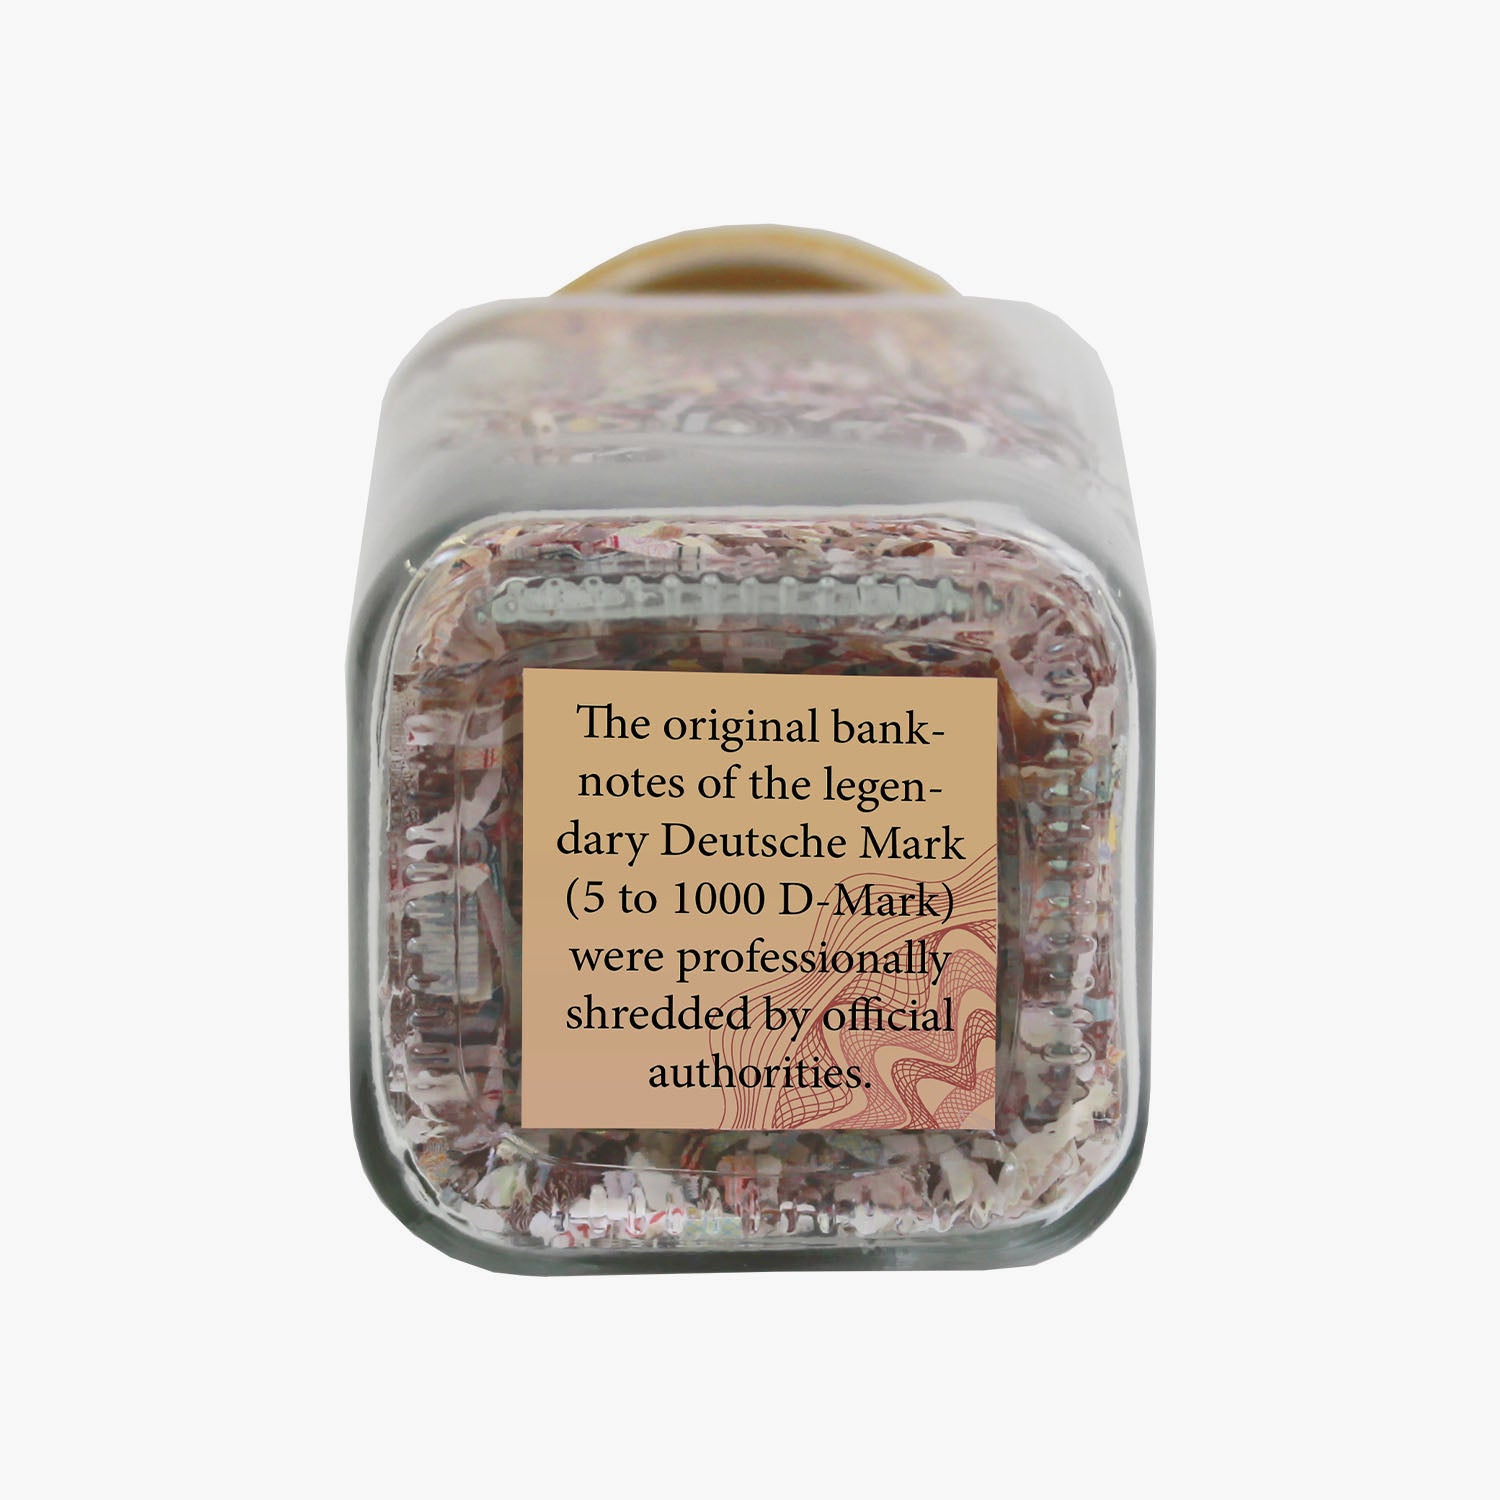 The Deutsch mark in a jar – shredded but not forgotten